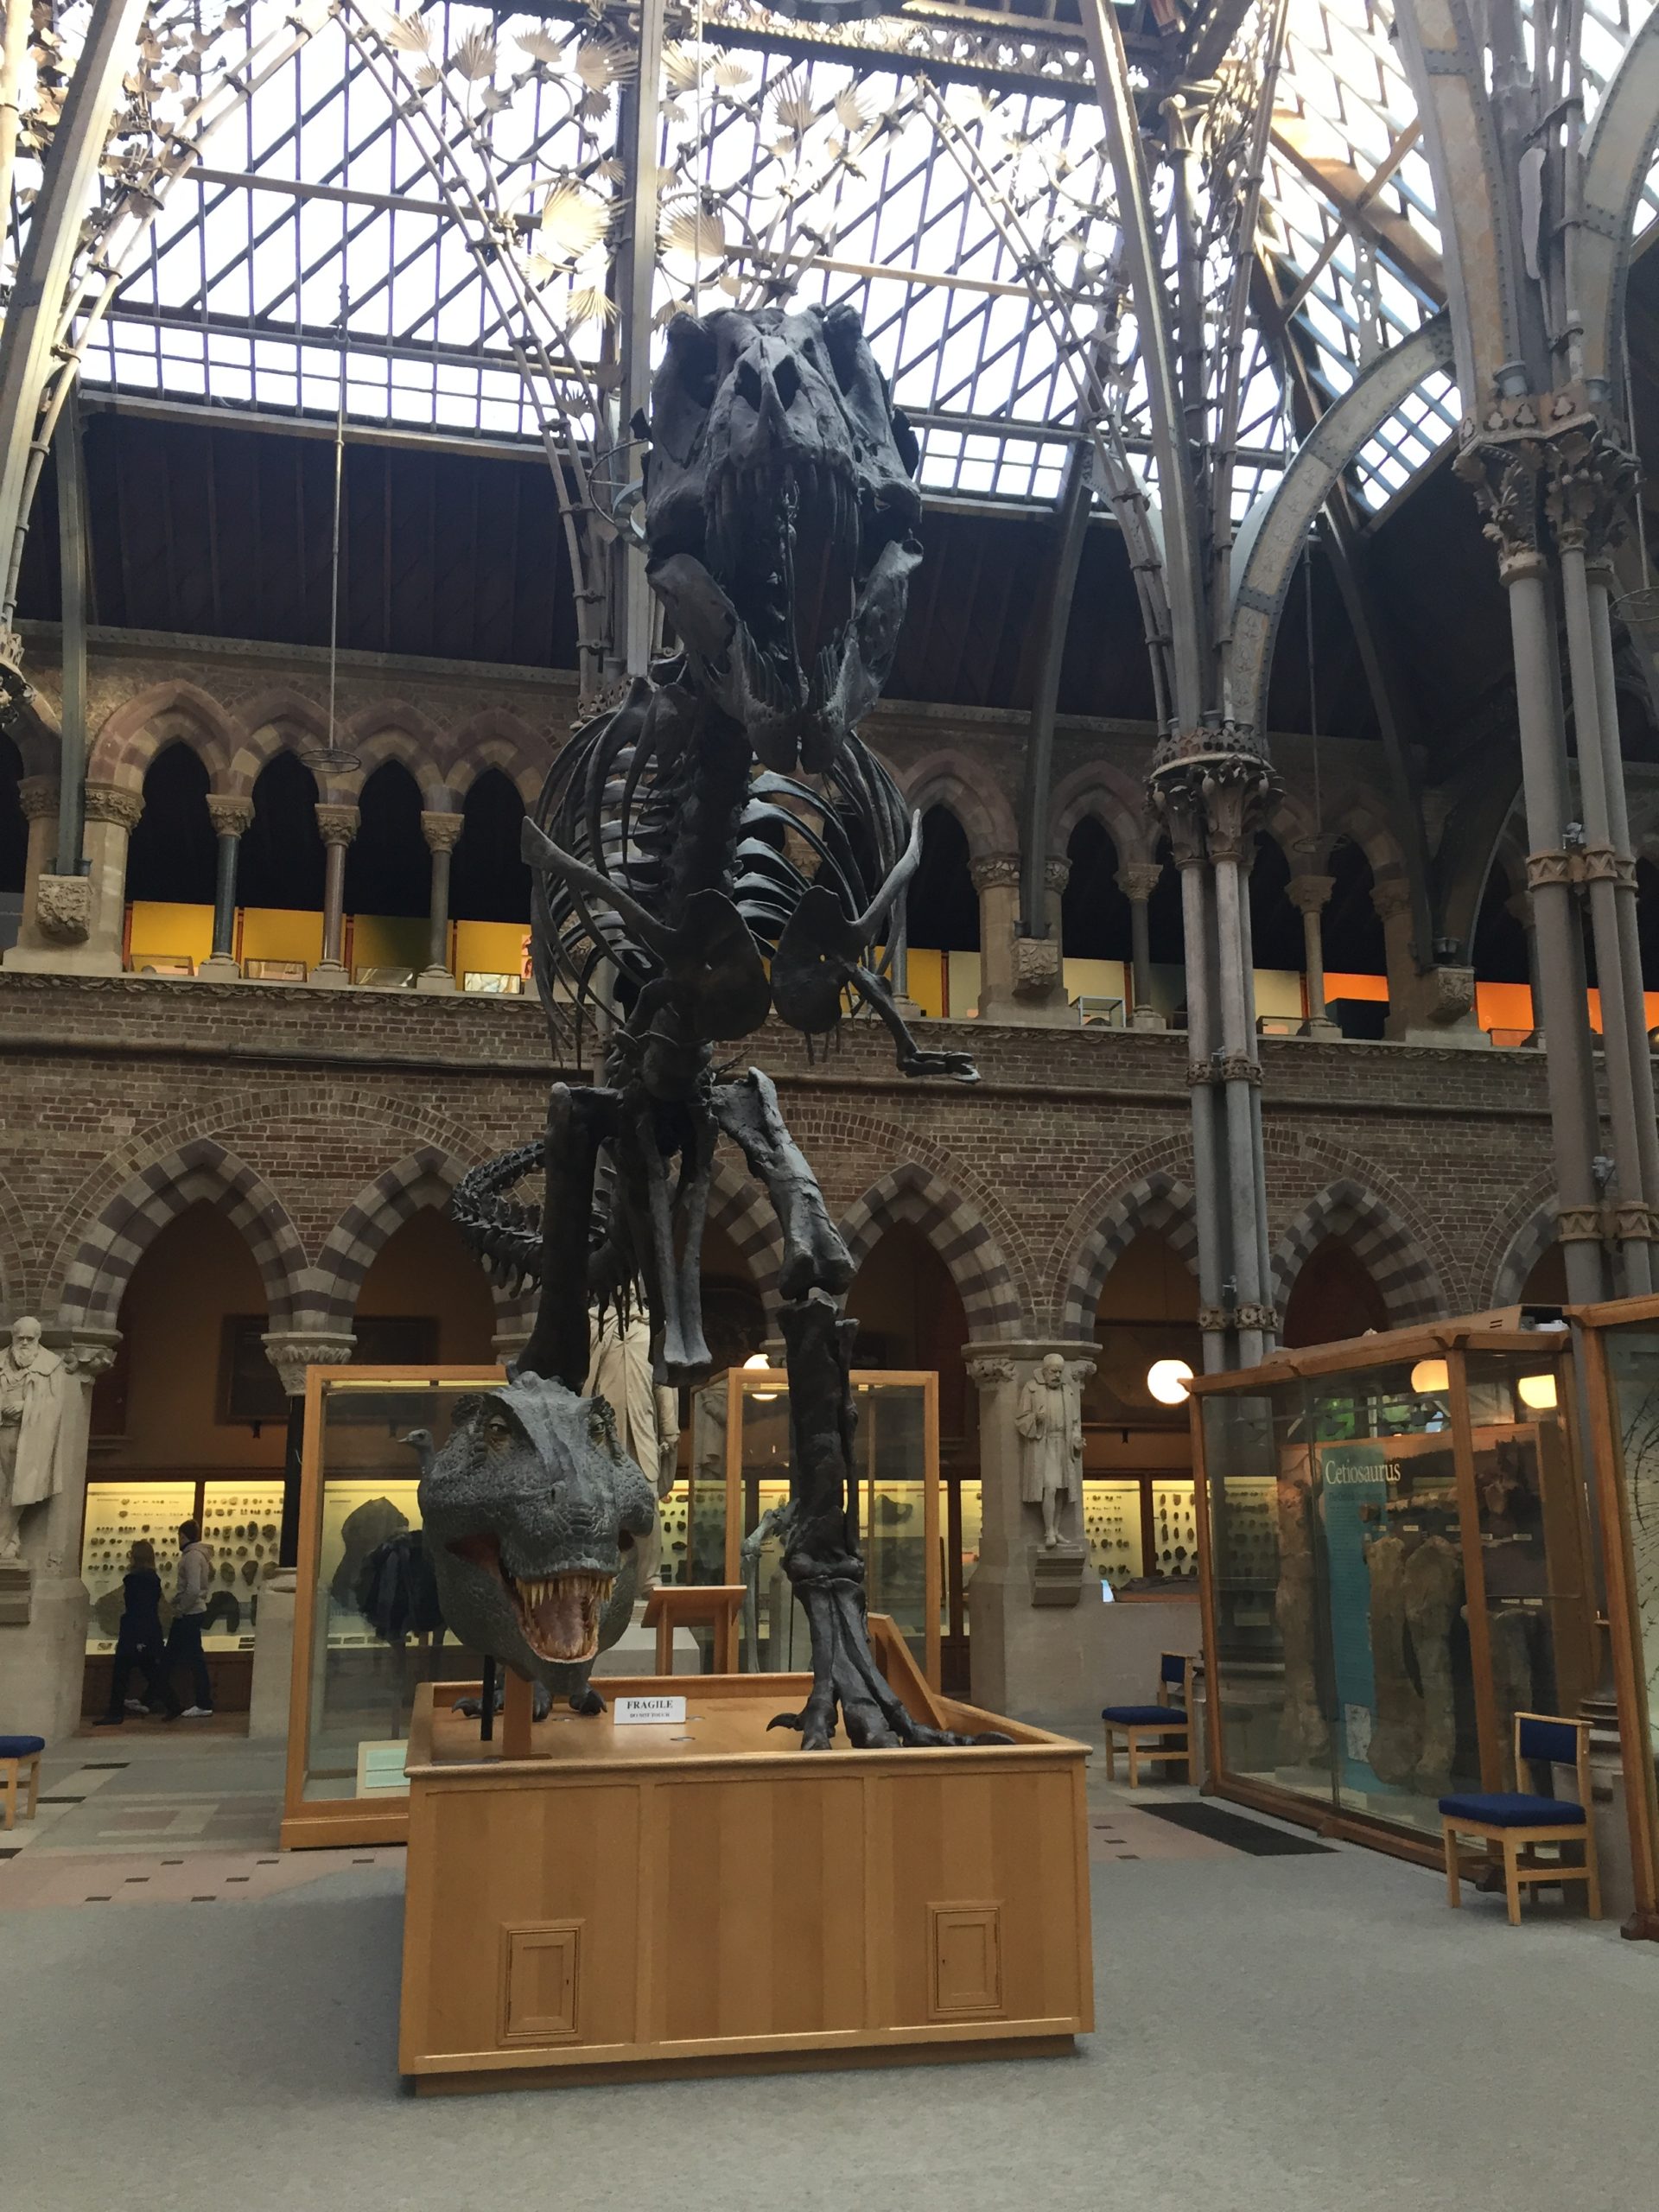 Dinosaur skeleton at the Pitt Rivers Museum